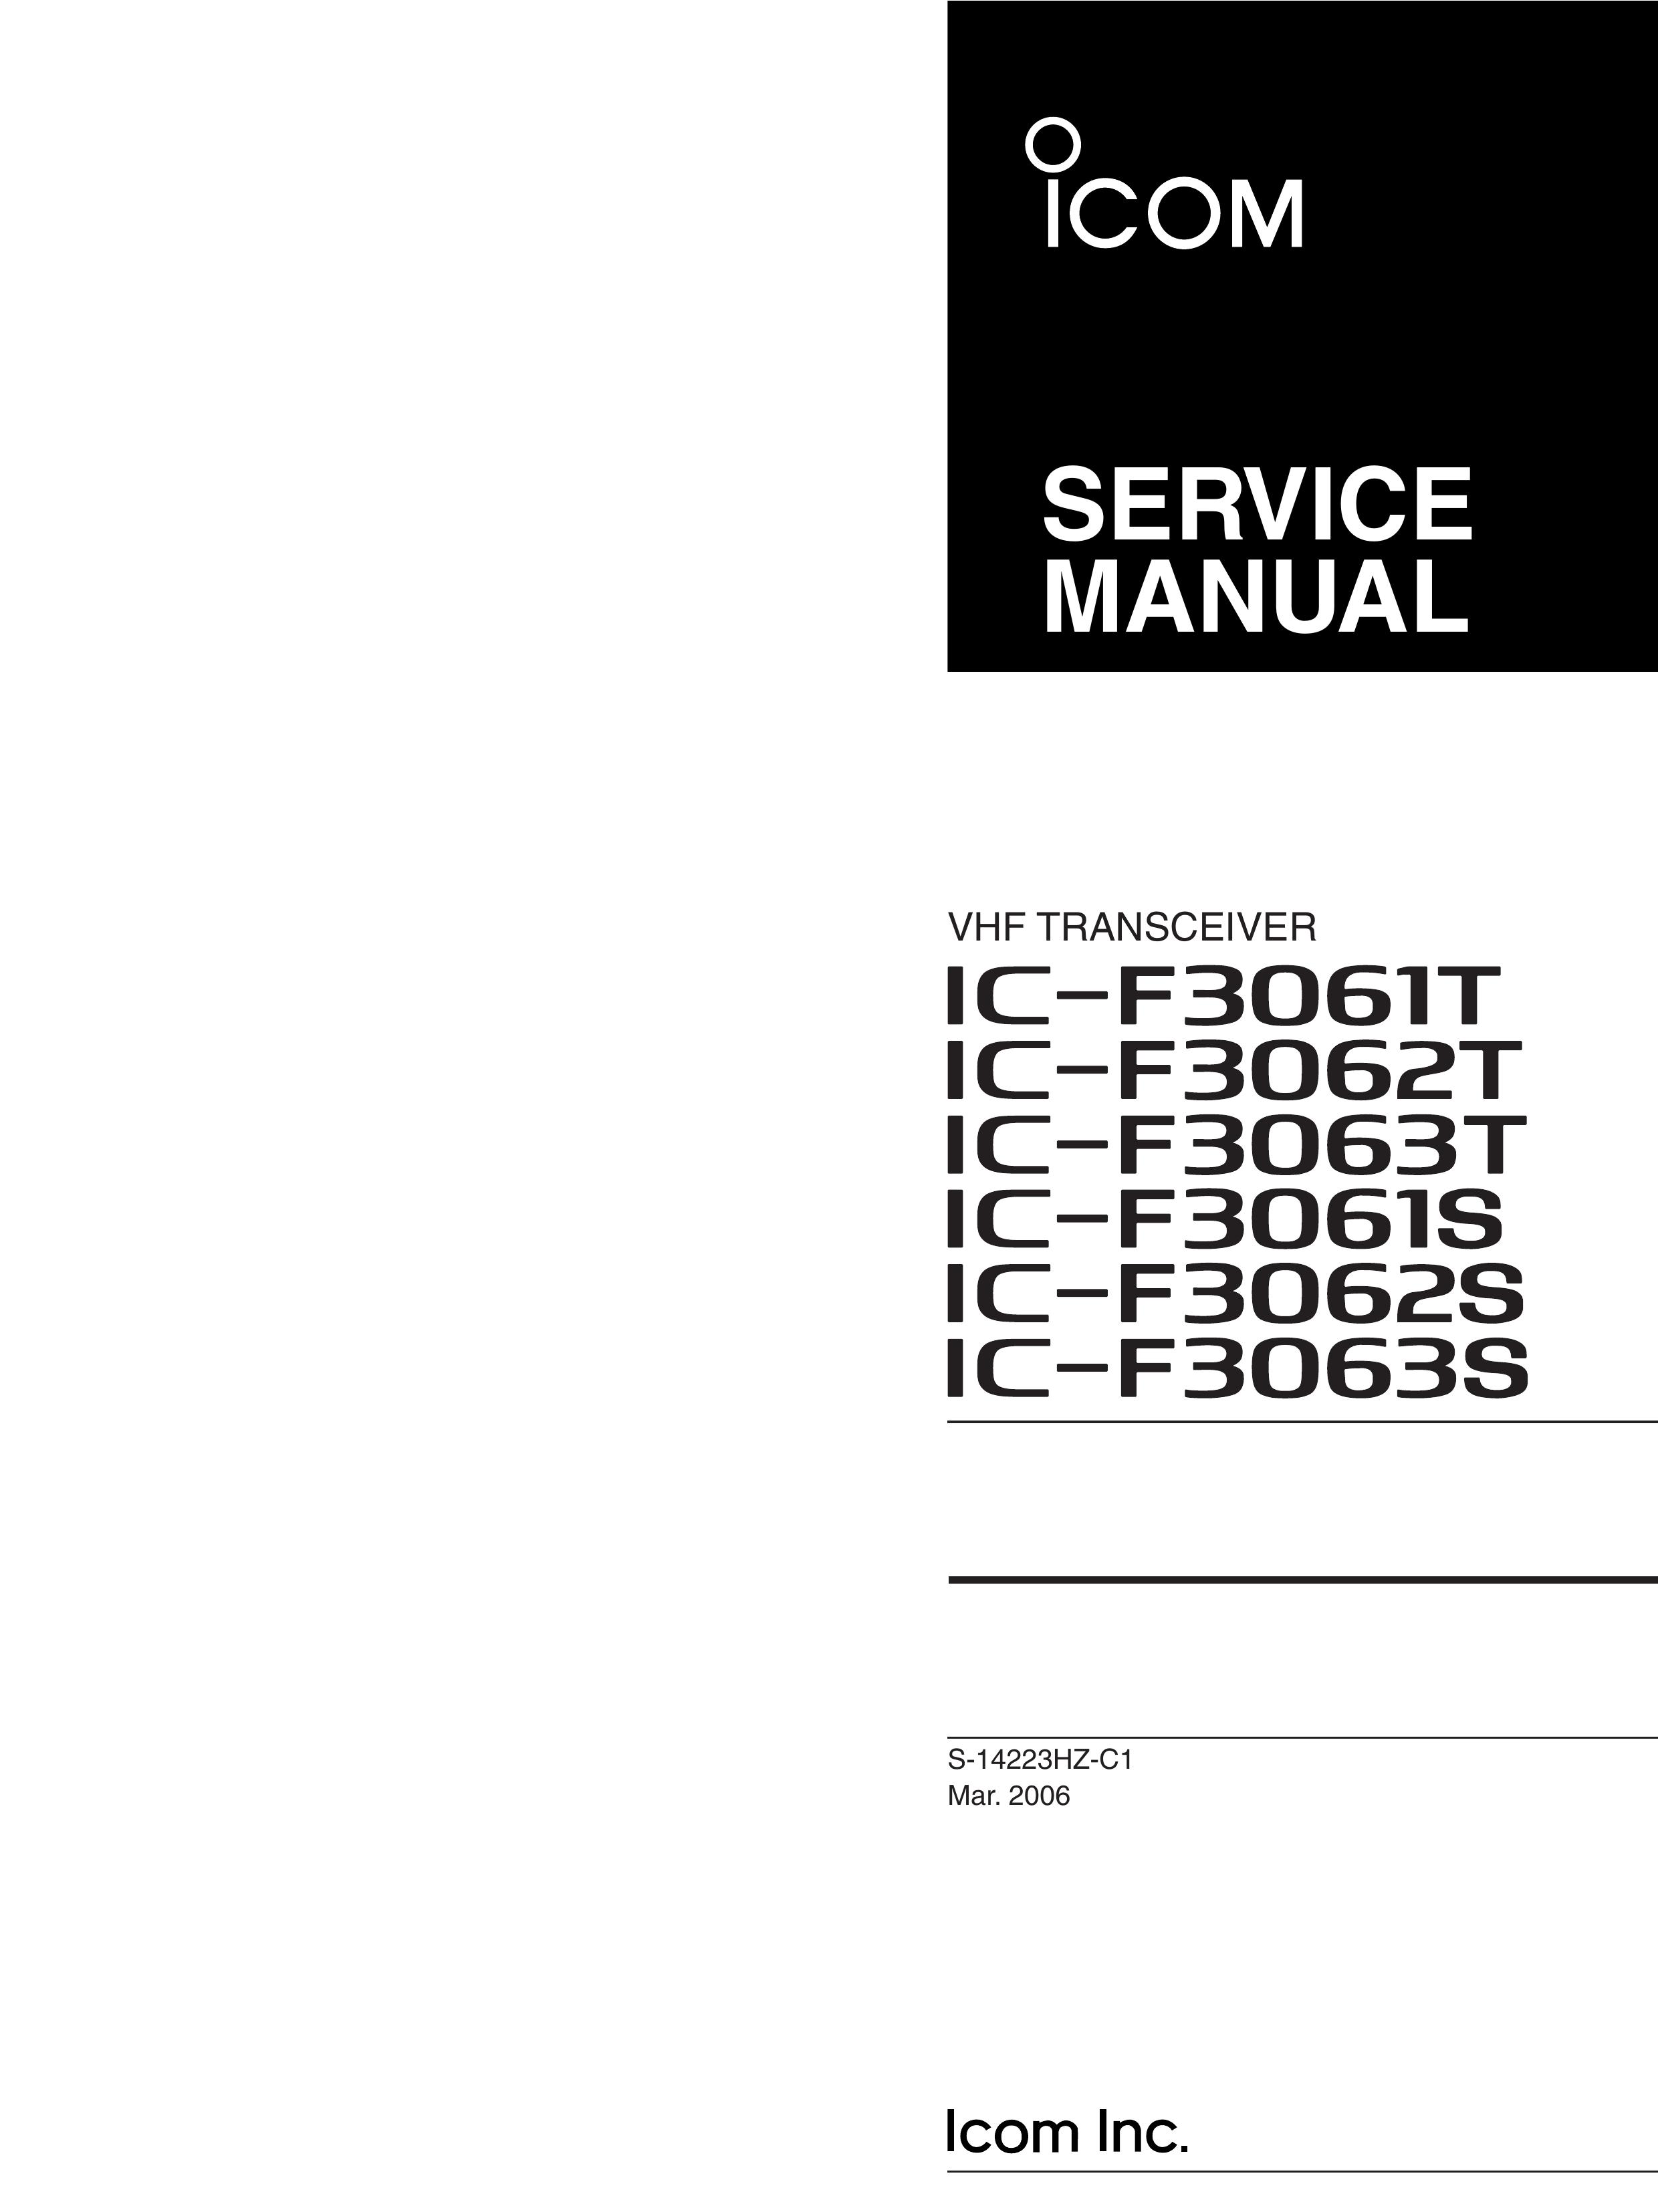 Icom IC-F3063S Marine Radio User Manual